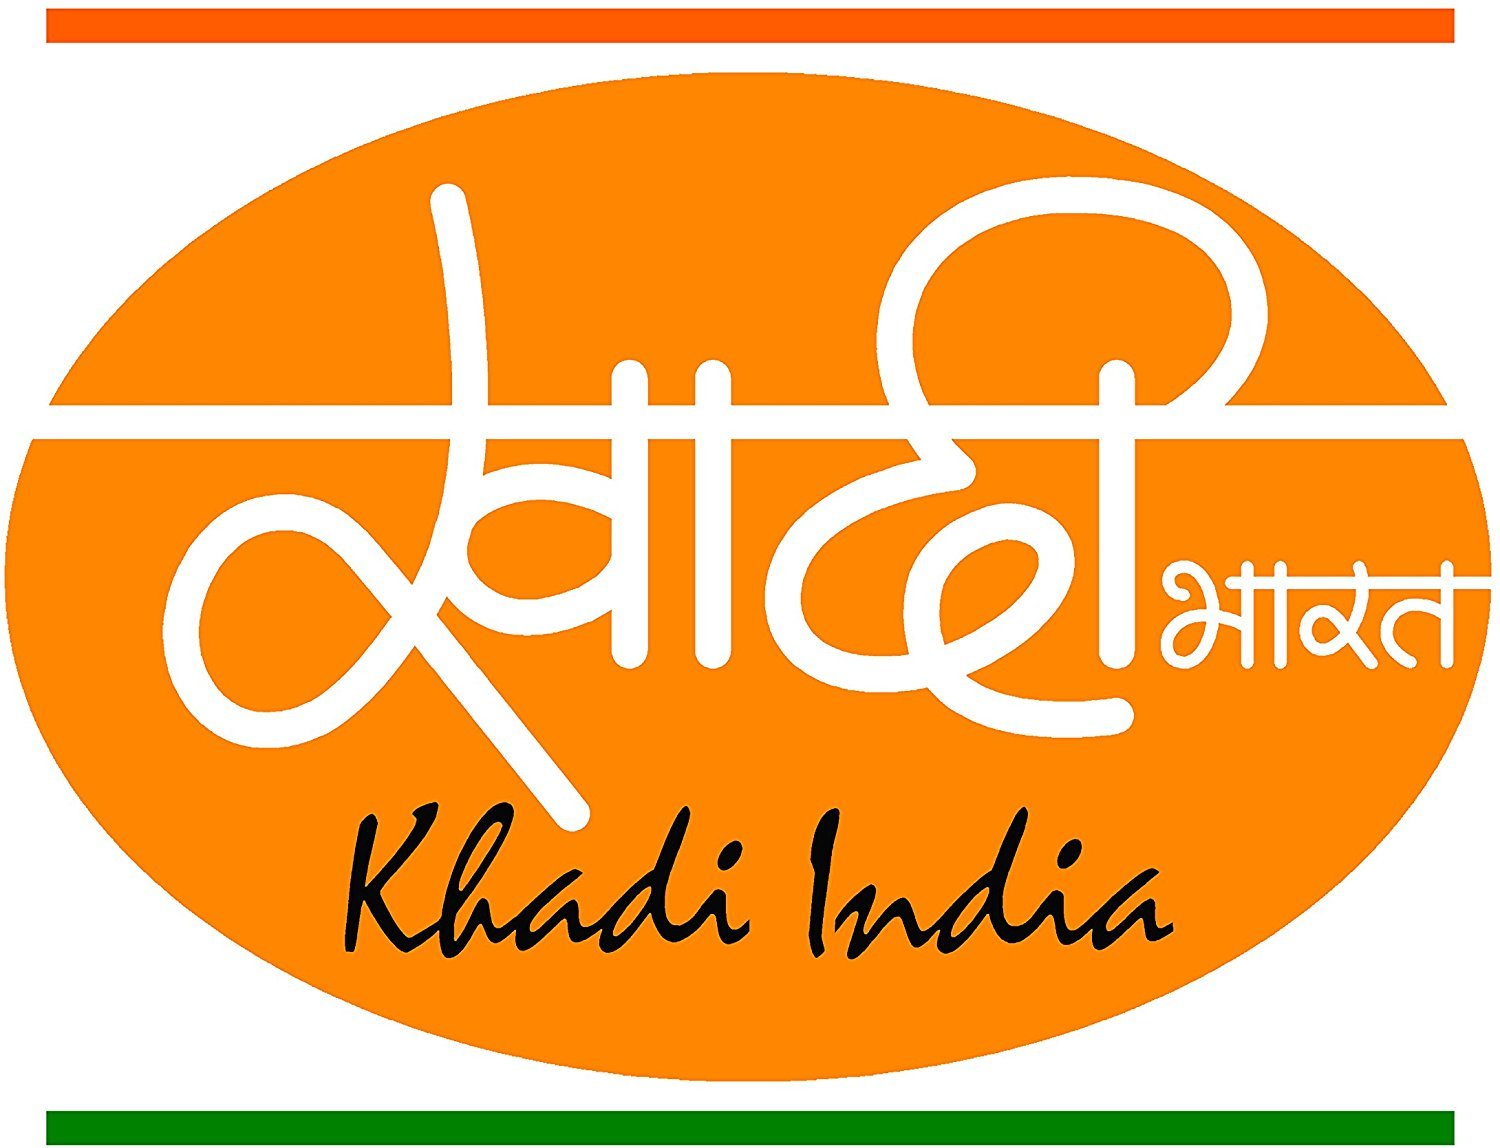 KHadi India